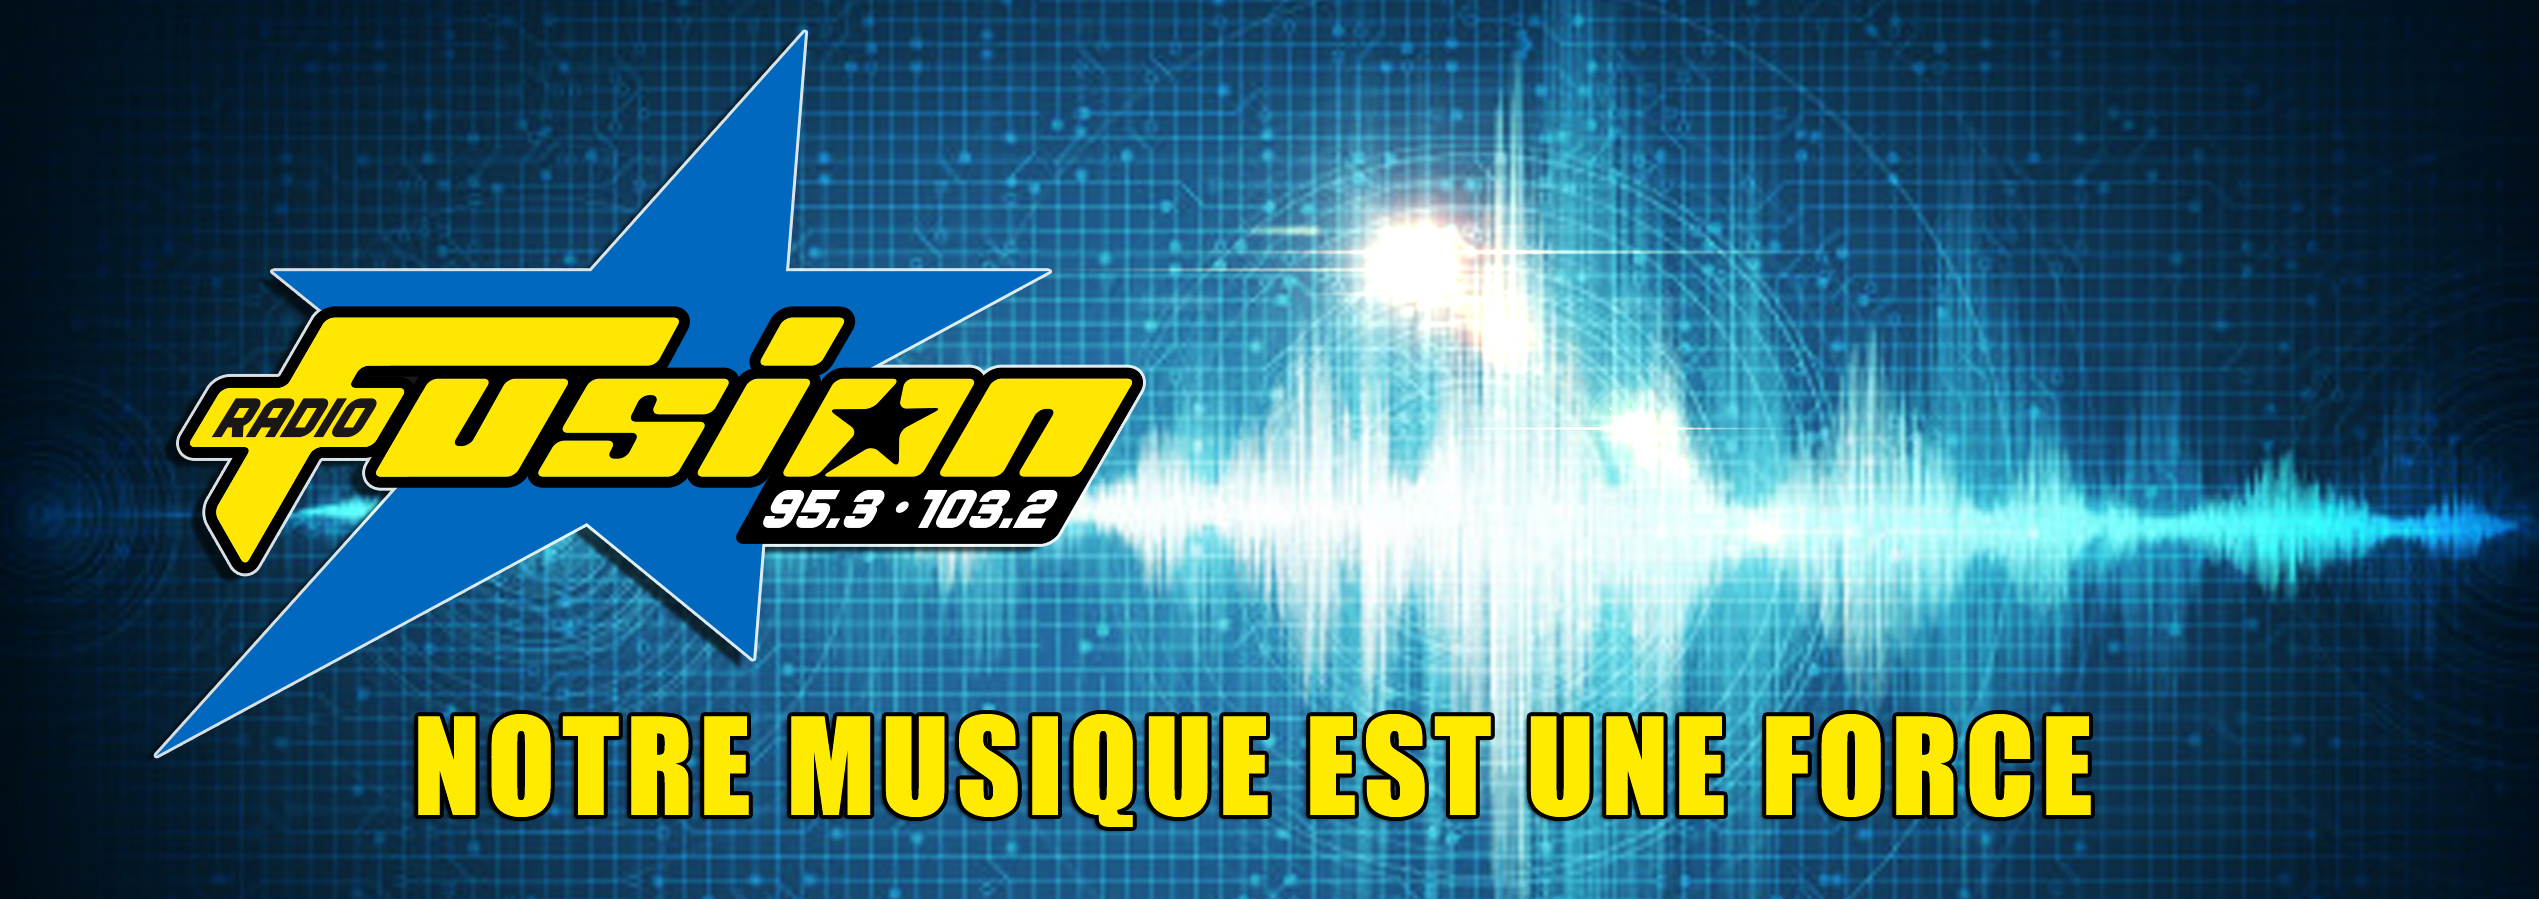 Logo Radio Fusion 95.3-103.2.jpg